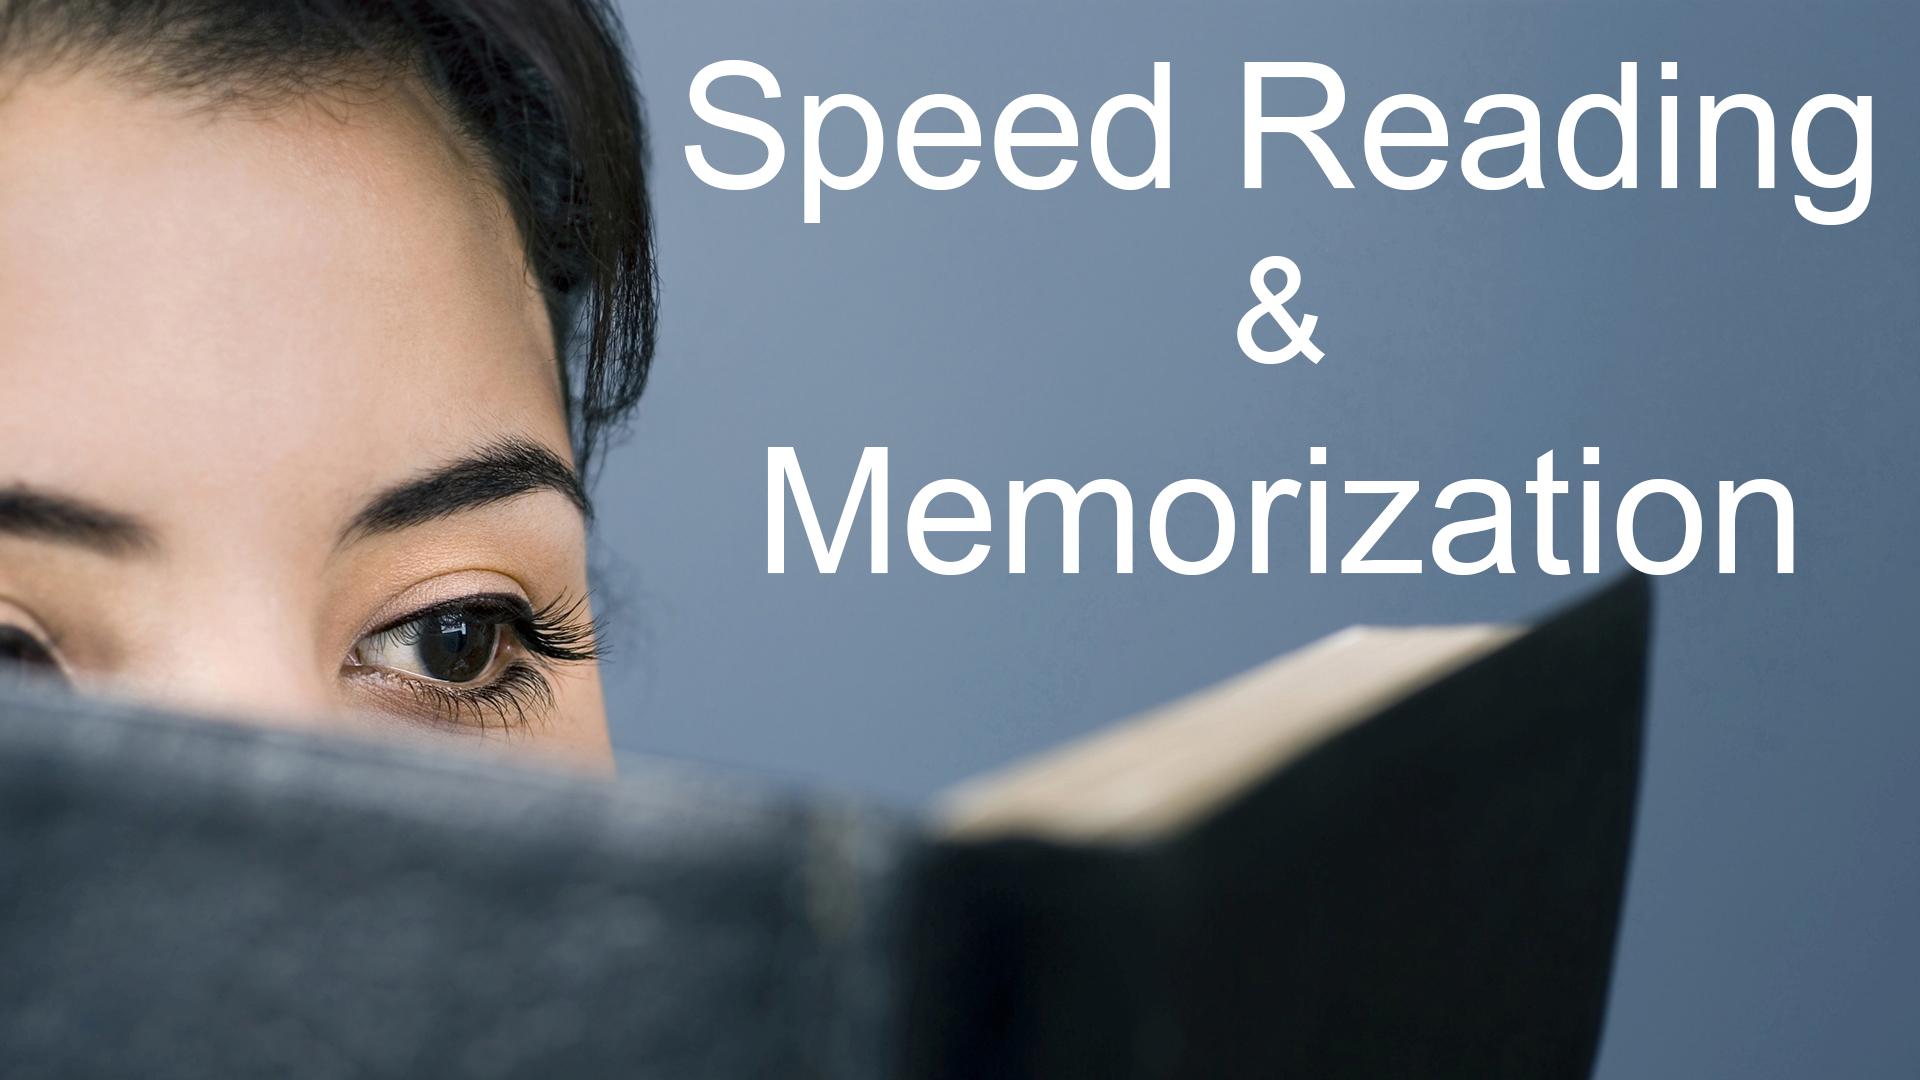 Speed Reading & Memorization Class in Houston